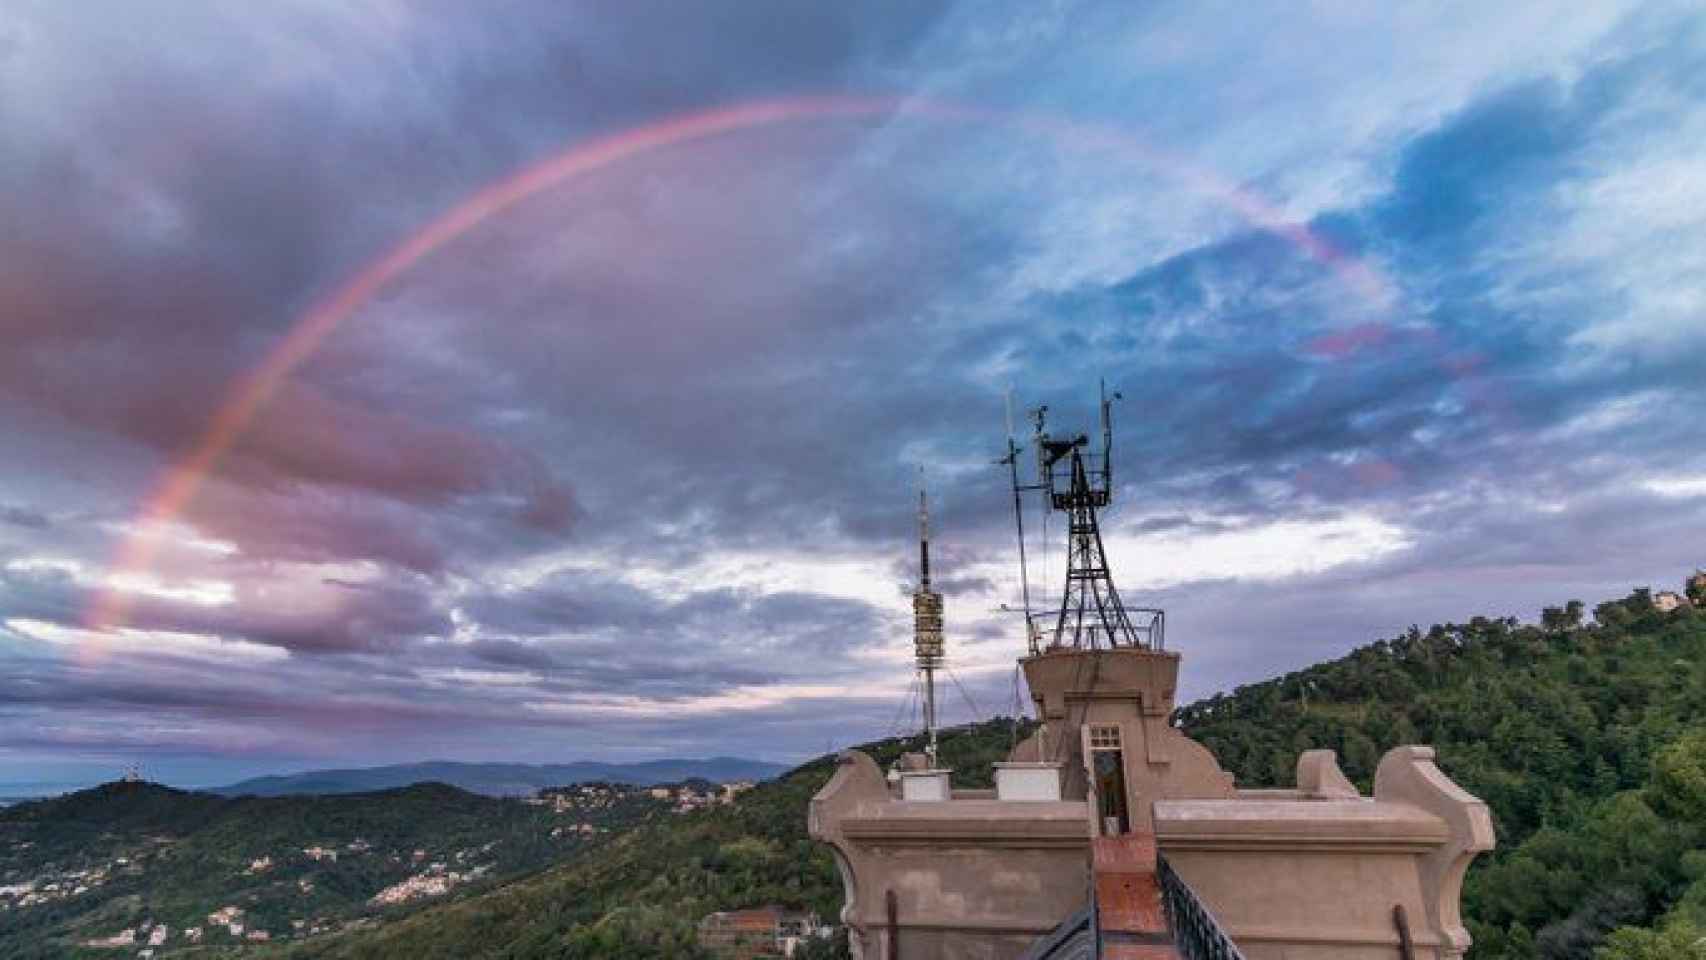 Arcoíris de color rojo en el Observatorio Fabra de Barcelona / ALFONS PUERTAS / alfonns_pc